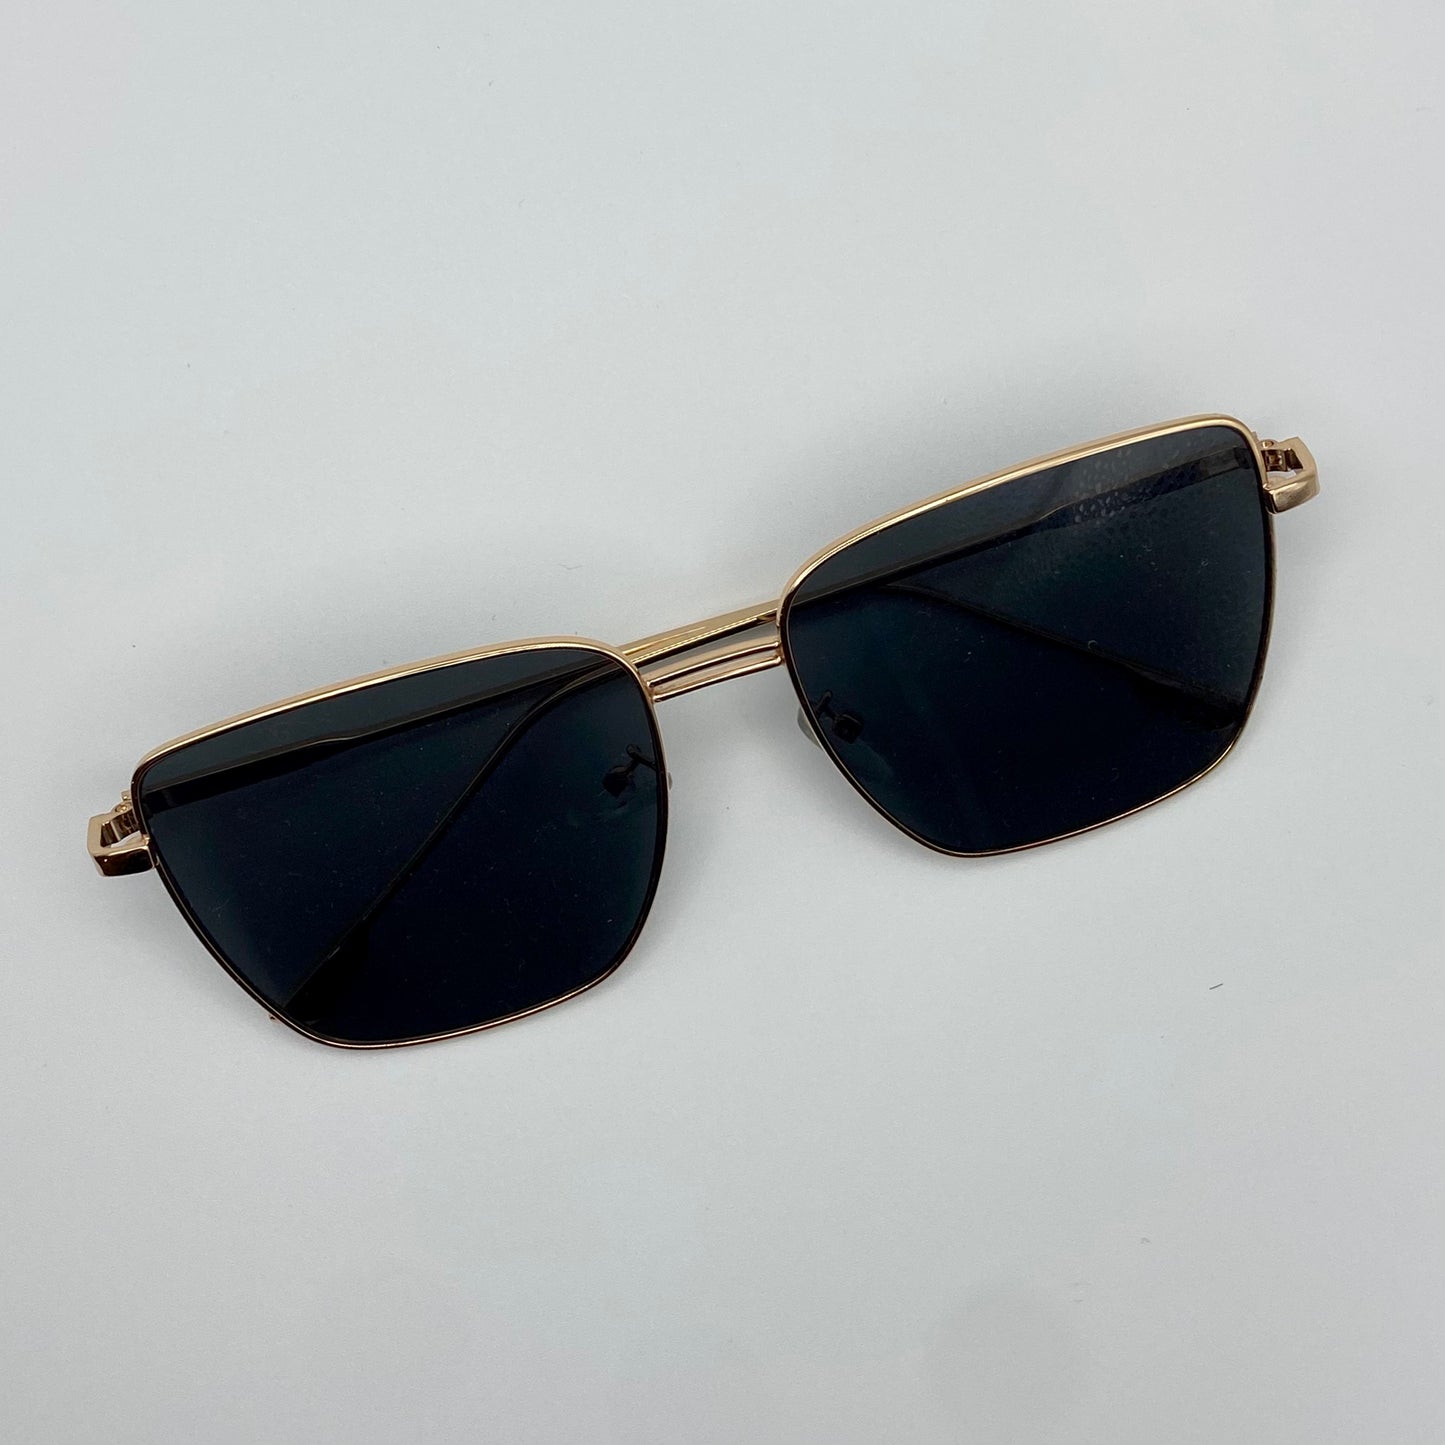 Classic Square Oversized Tinted Fashion Glasses - Black & Gold